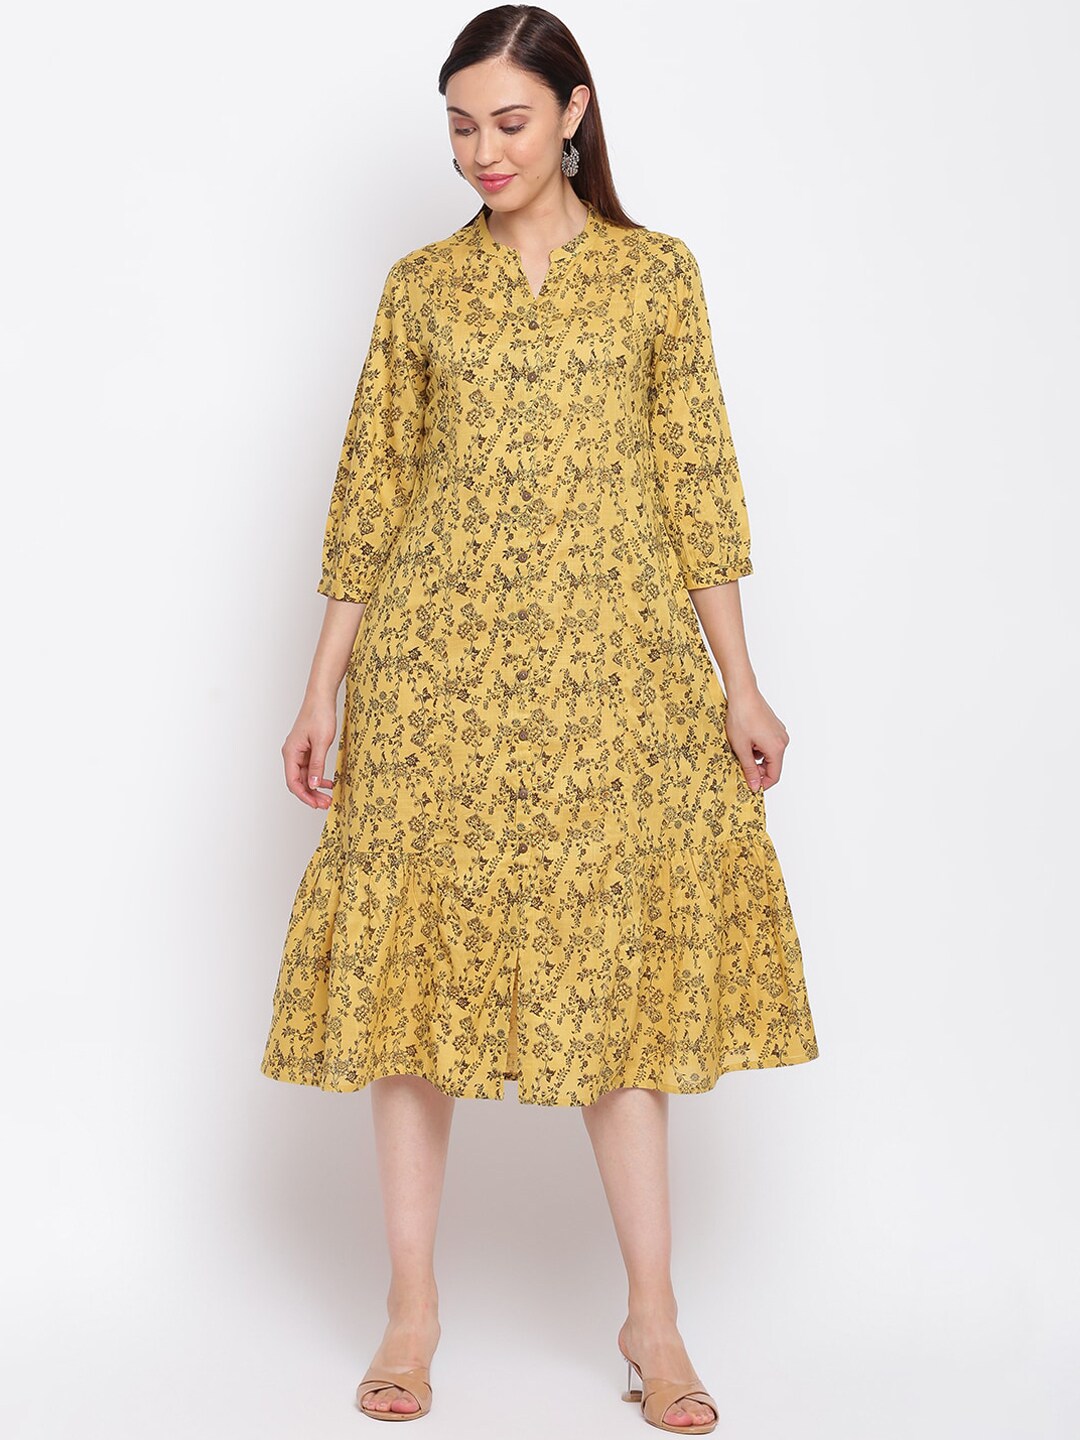 IMARA Yellow Floral Liva Ethnic A-Line Midi Dress Price in India